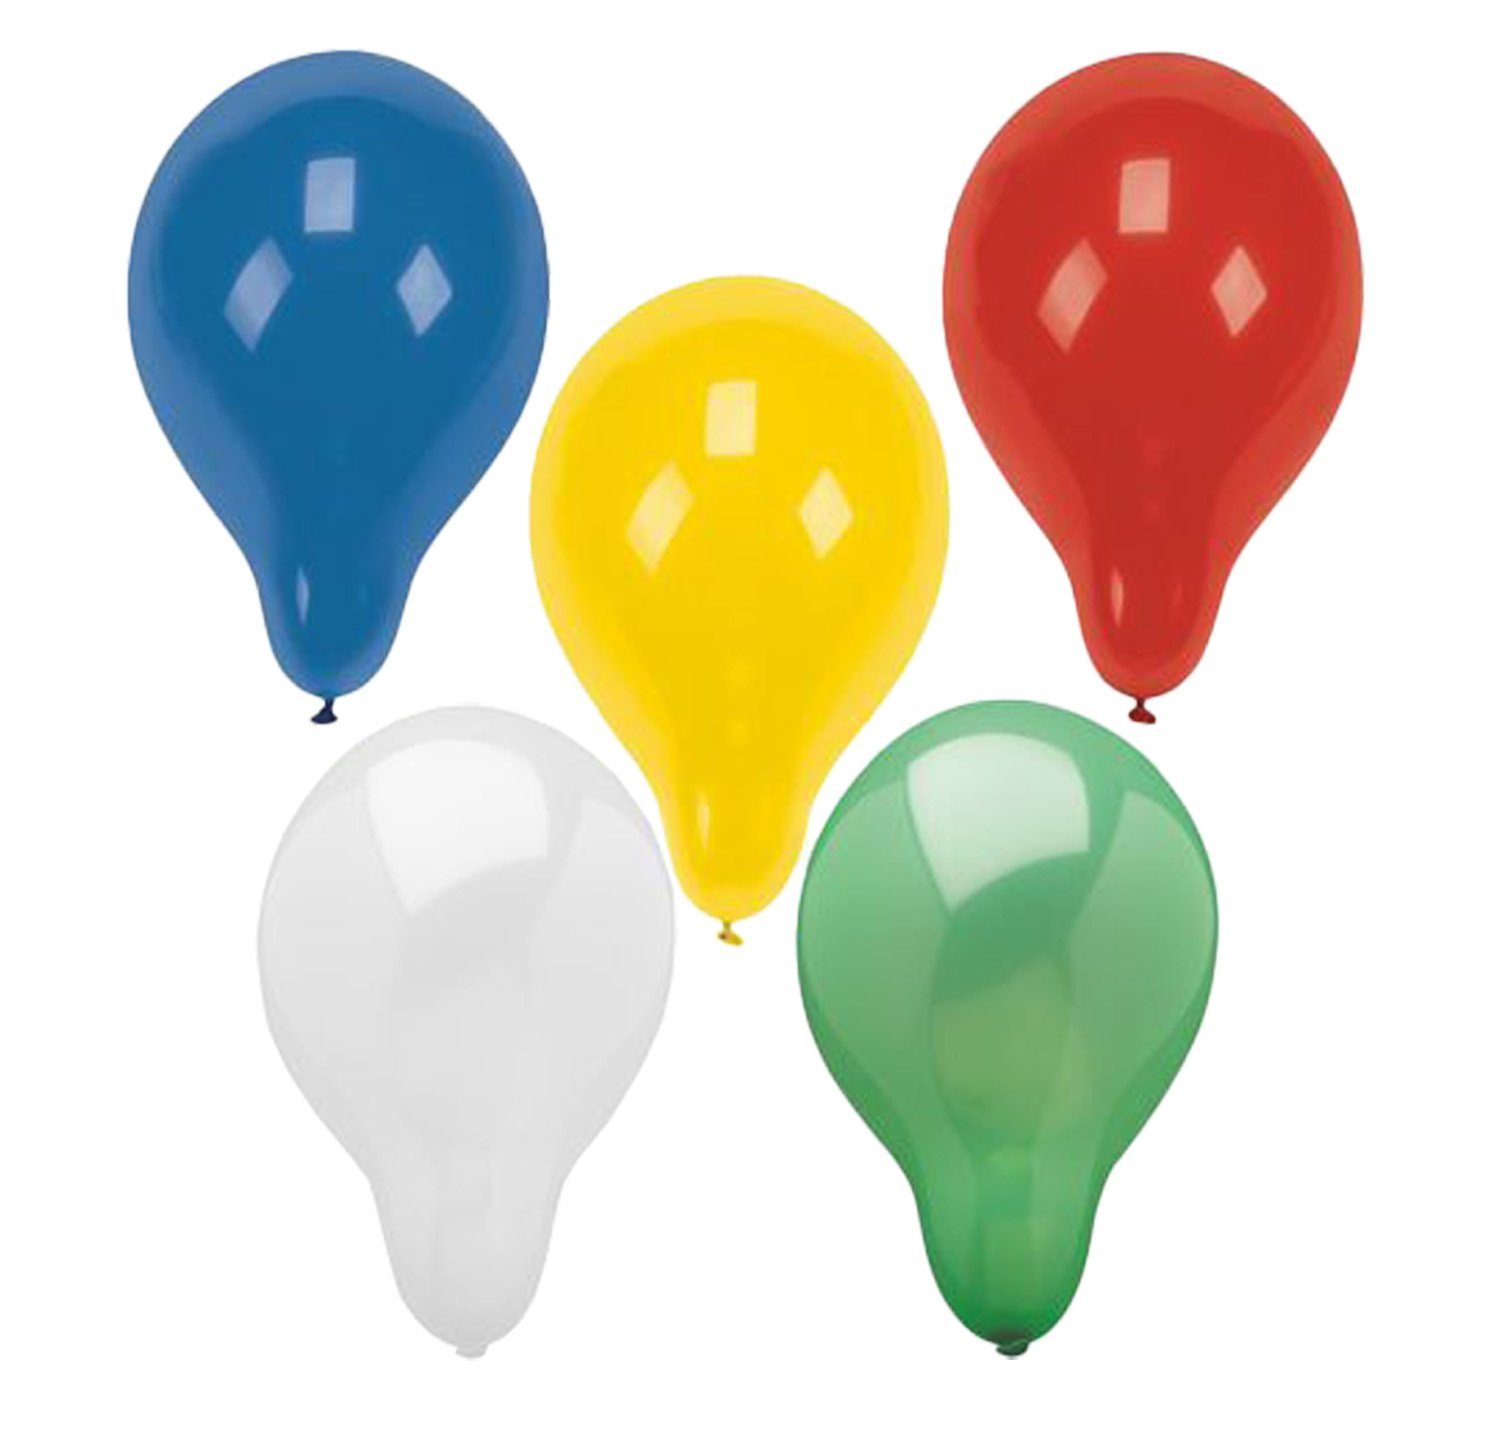 PAPSTAR Luftballon 8 Luftballons Ø 32 cm farbig sortiert, Ballons bunt Kinder Party Hiochzeit Event Spielzeug